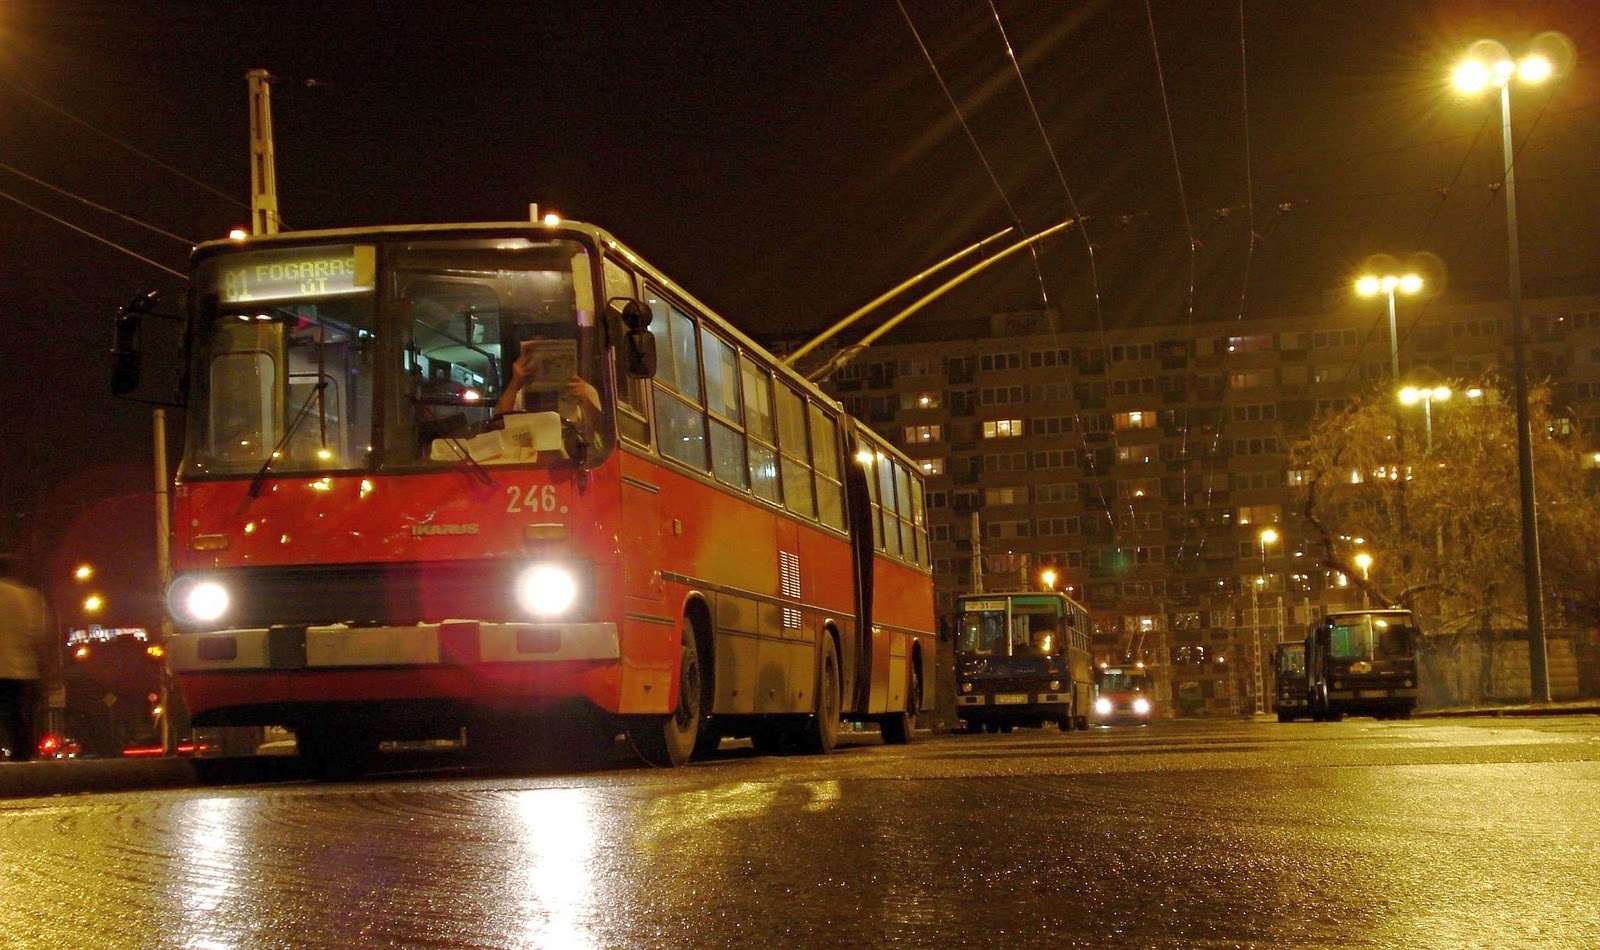 transpress nz: Ikarus trolley bus, Budapest, Hungary